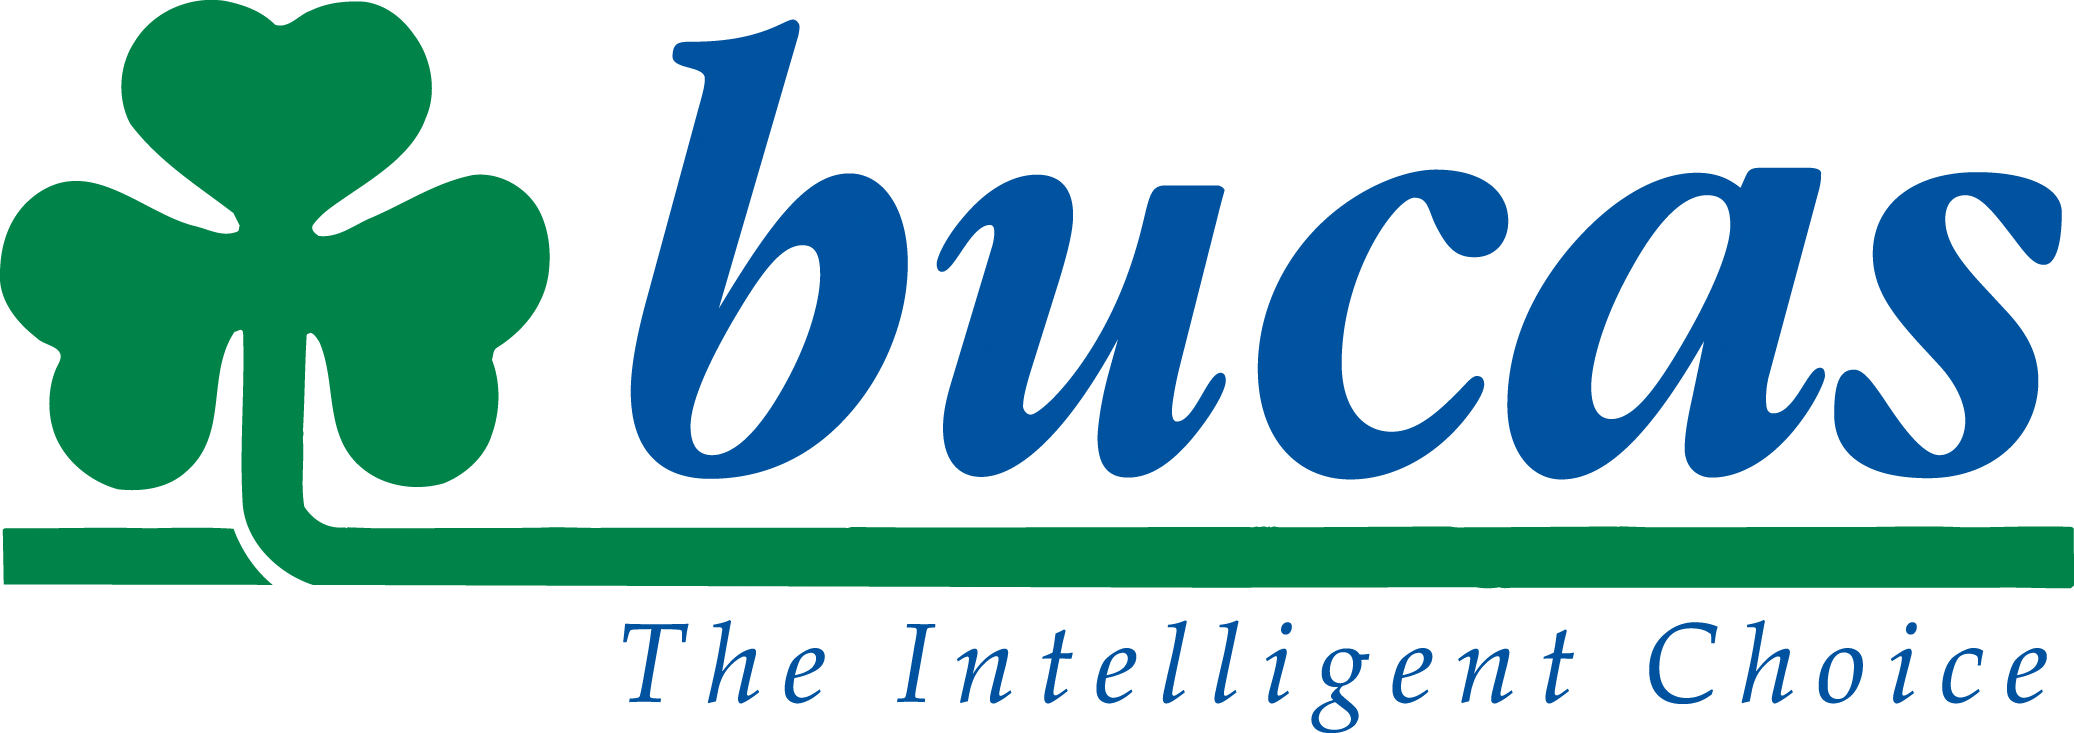 BUCAS logo.png